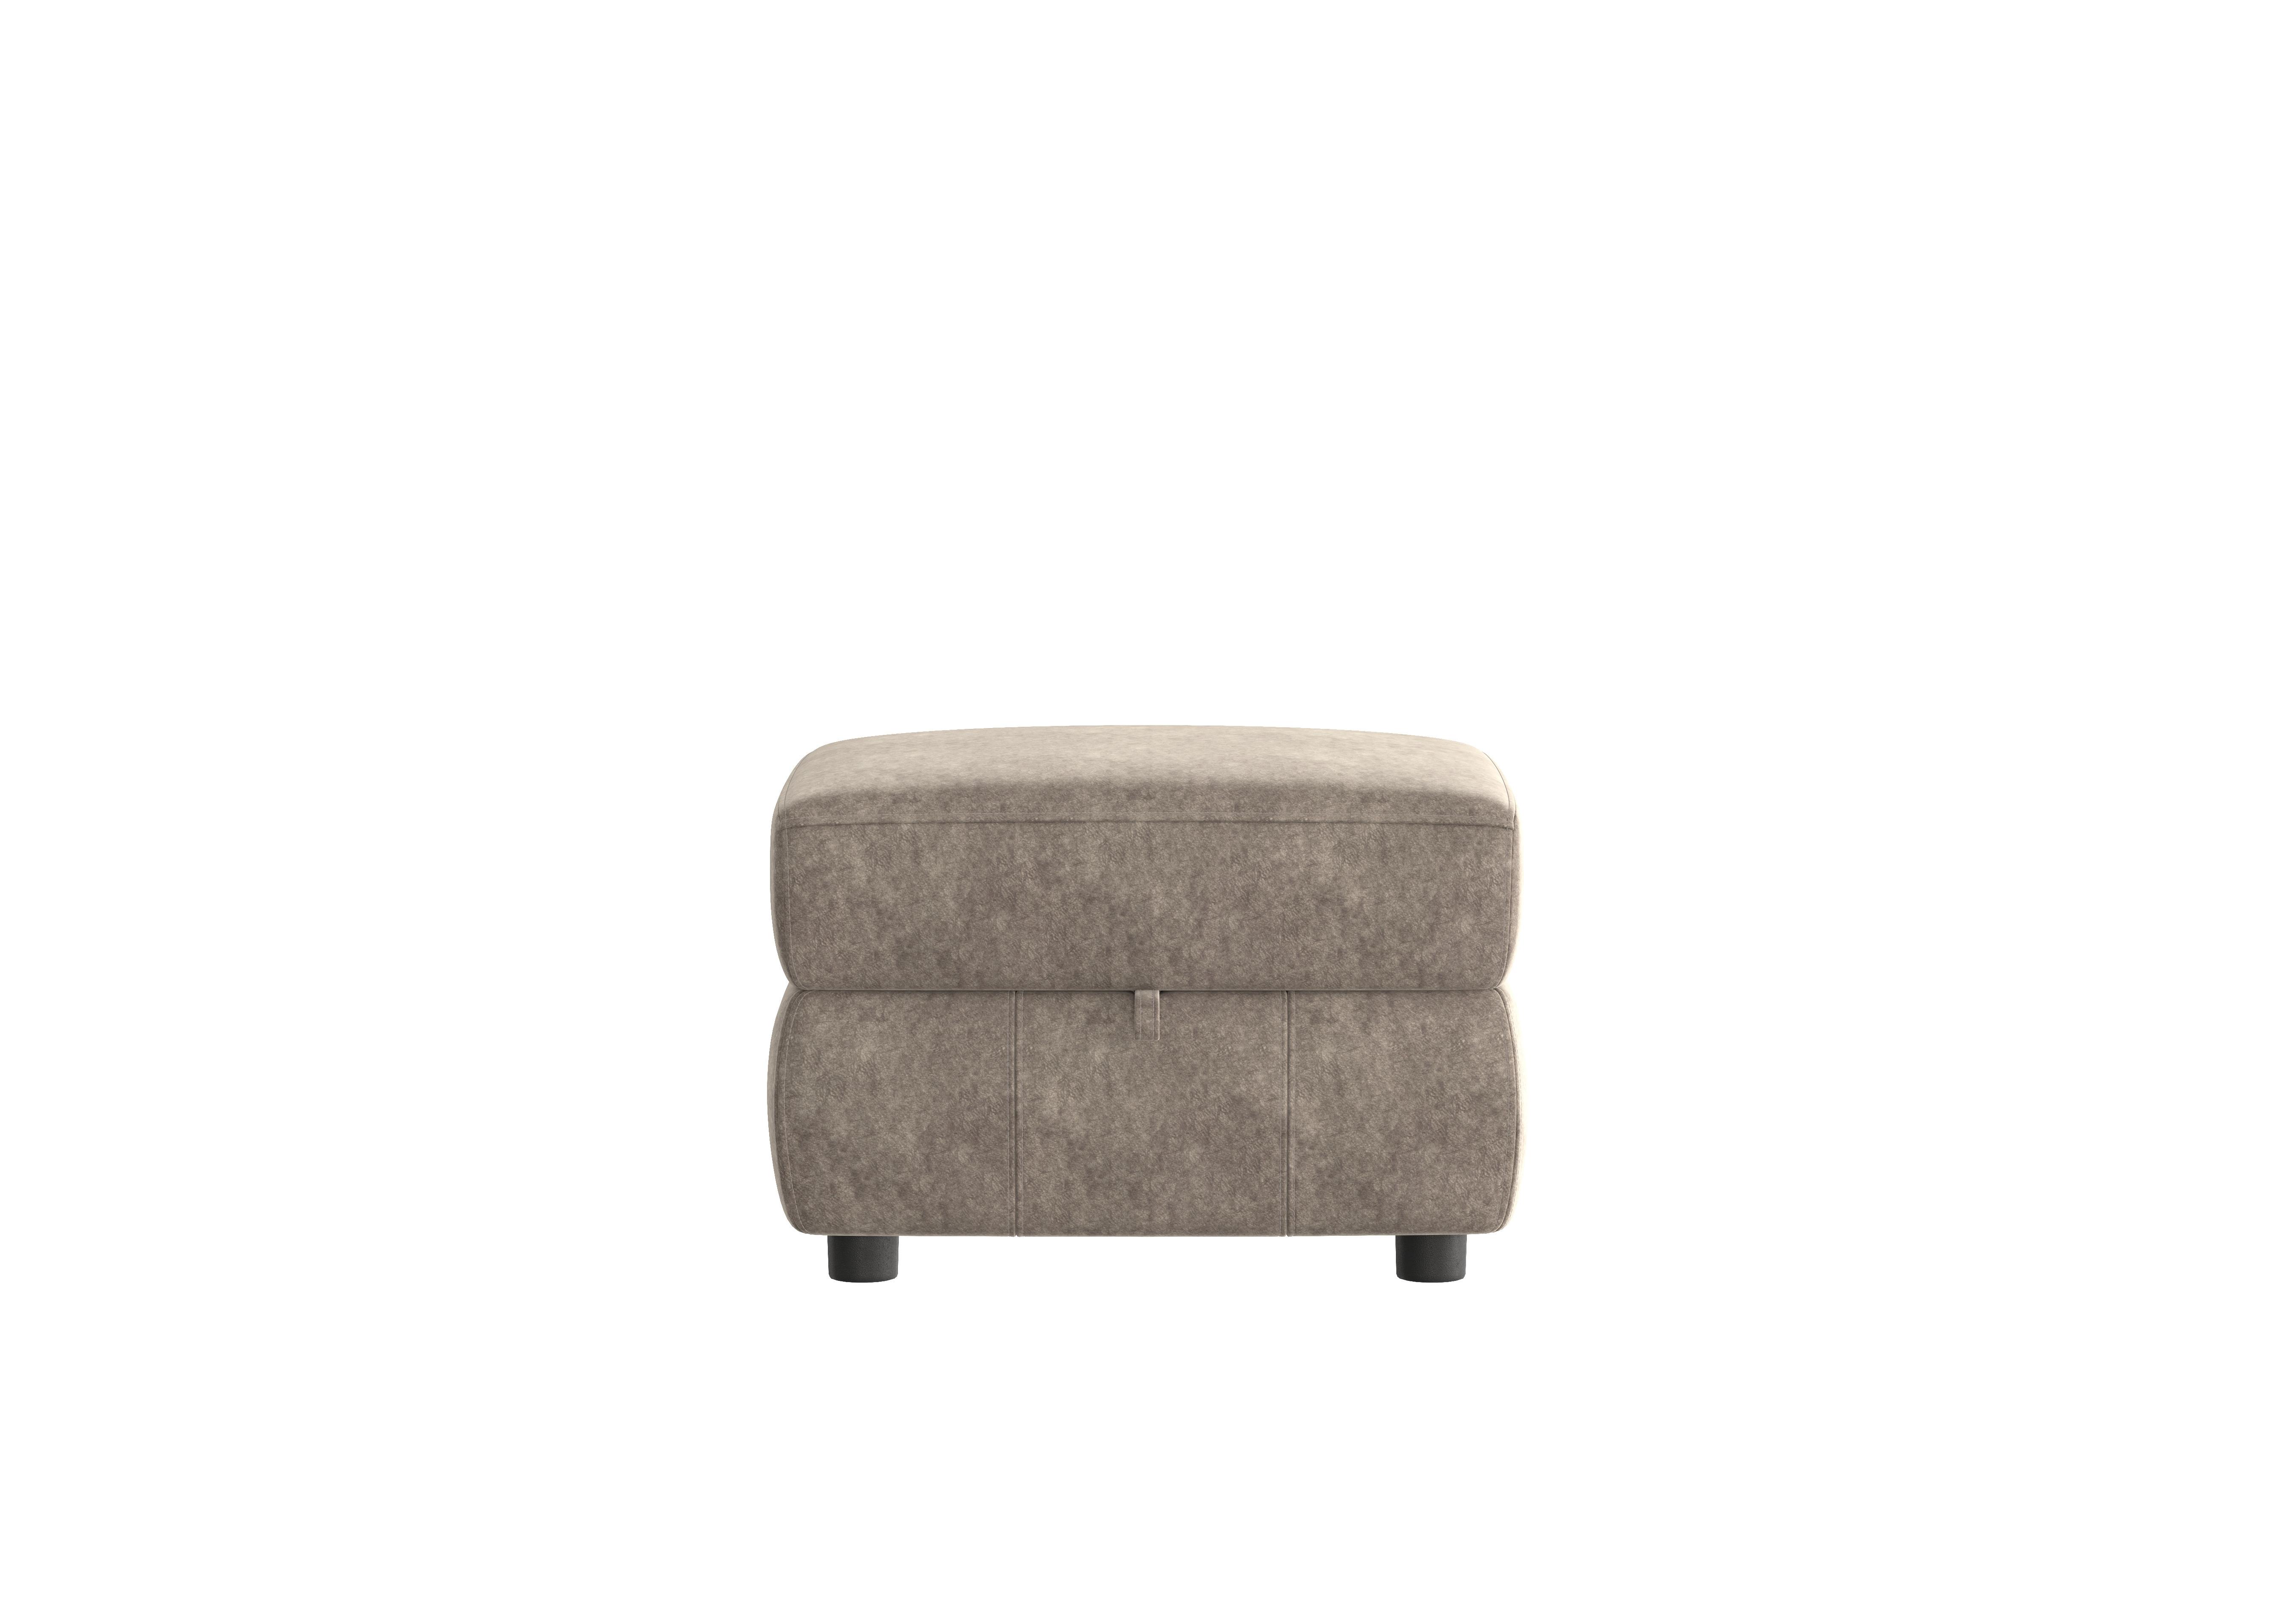 Relax Station Revive Fabric Storage Footstool in Bfa-Bnn-R29 Fv1 Mink on Furniture Village